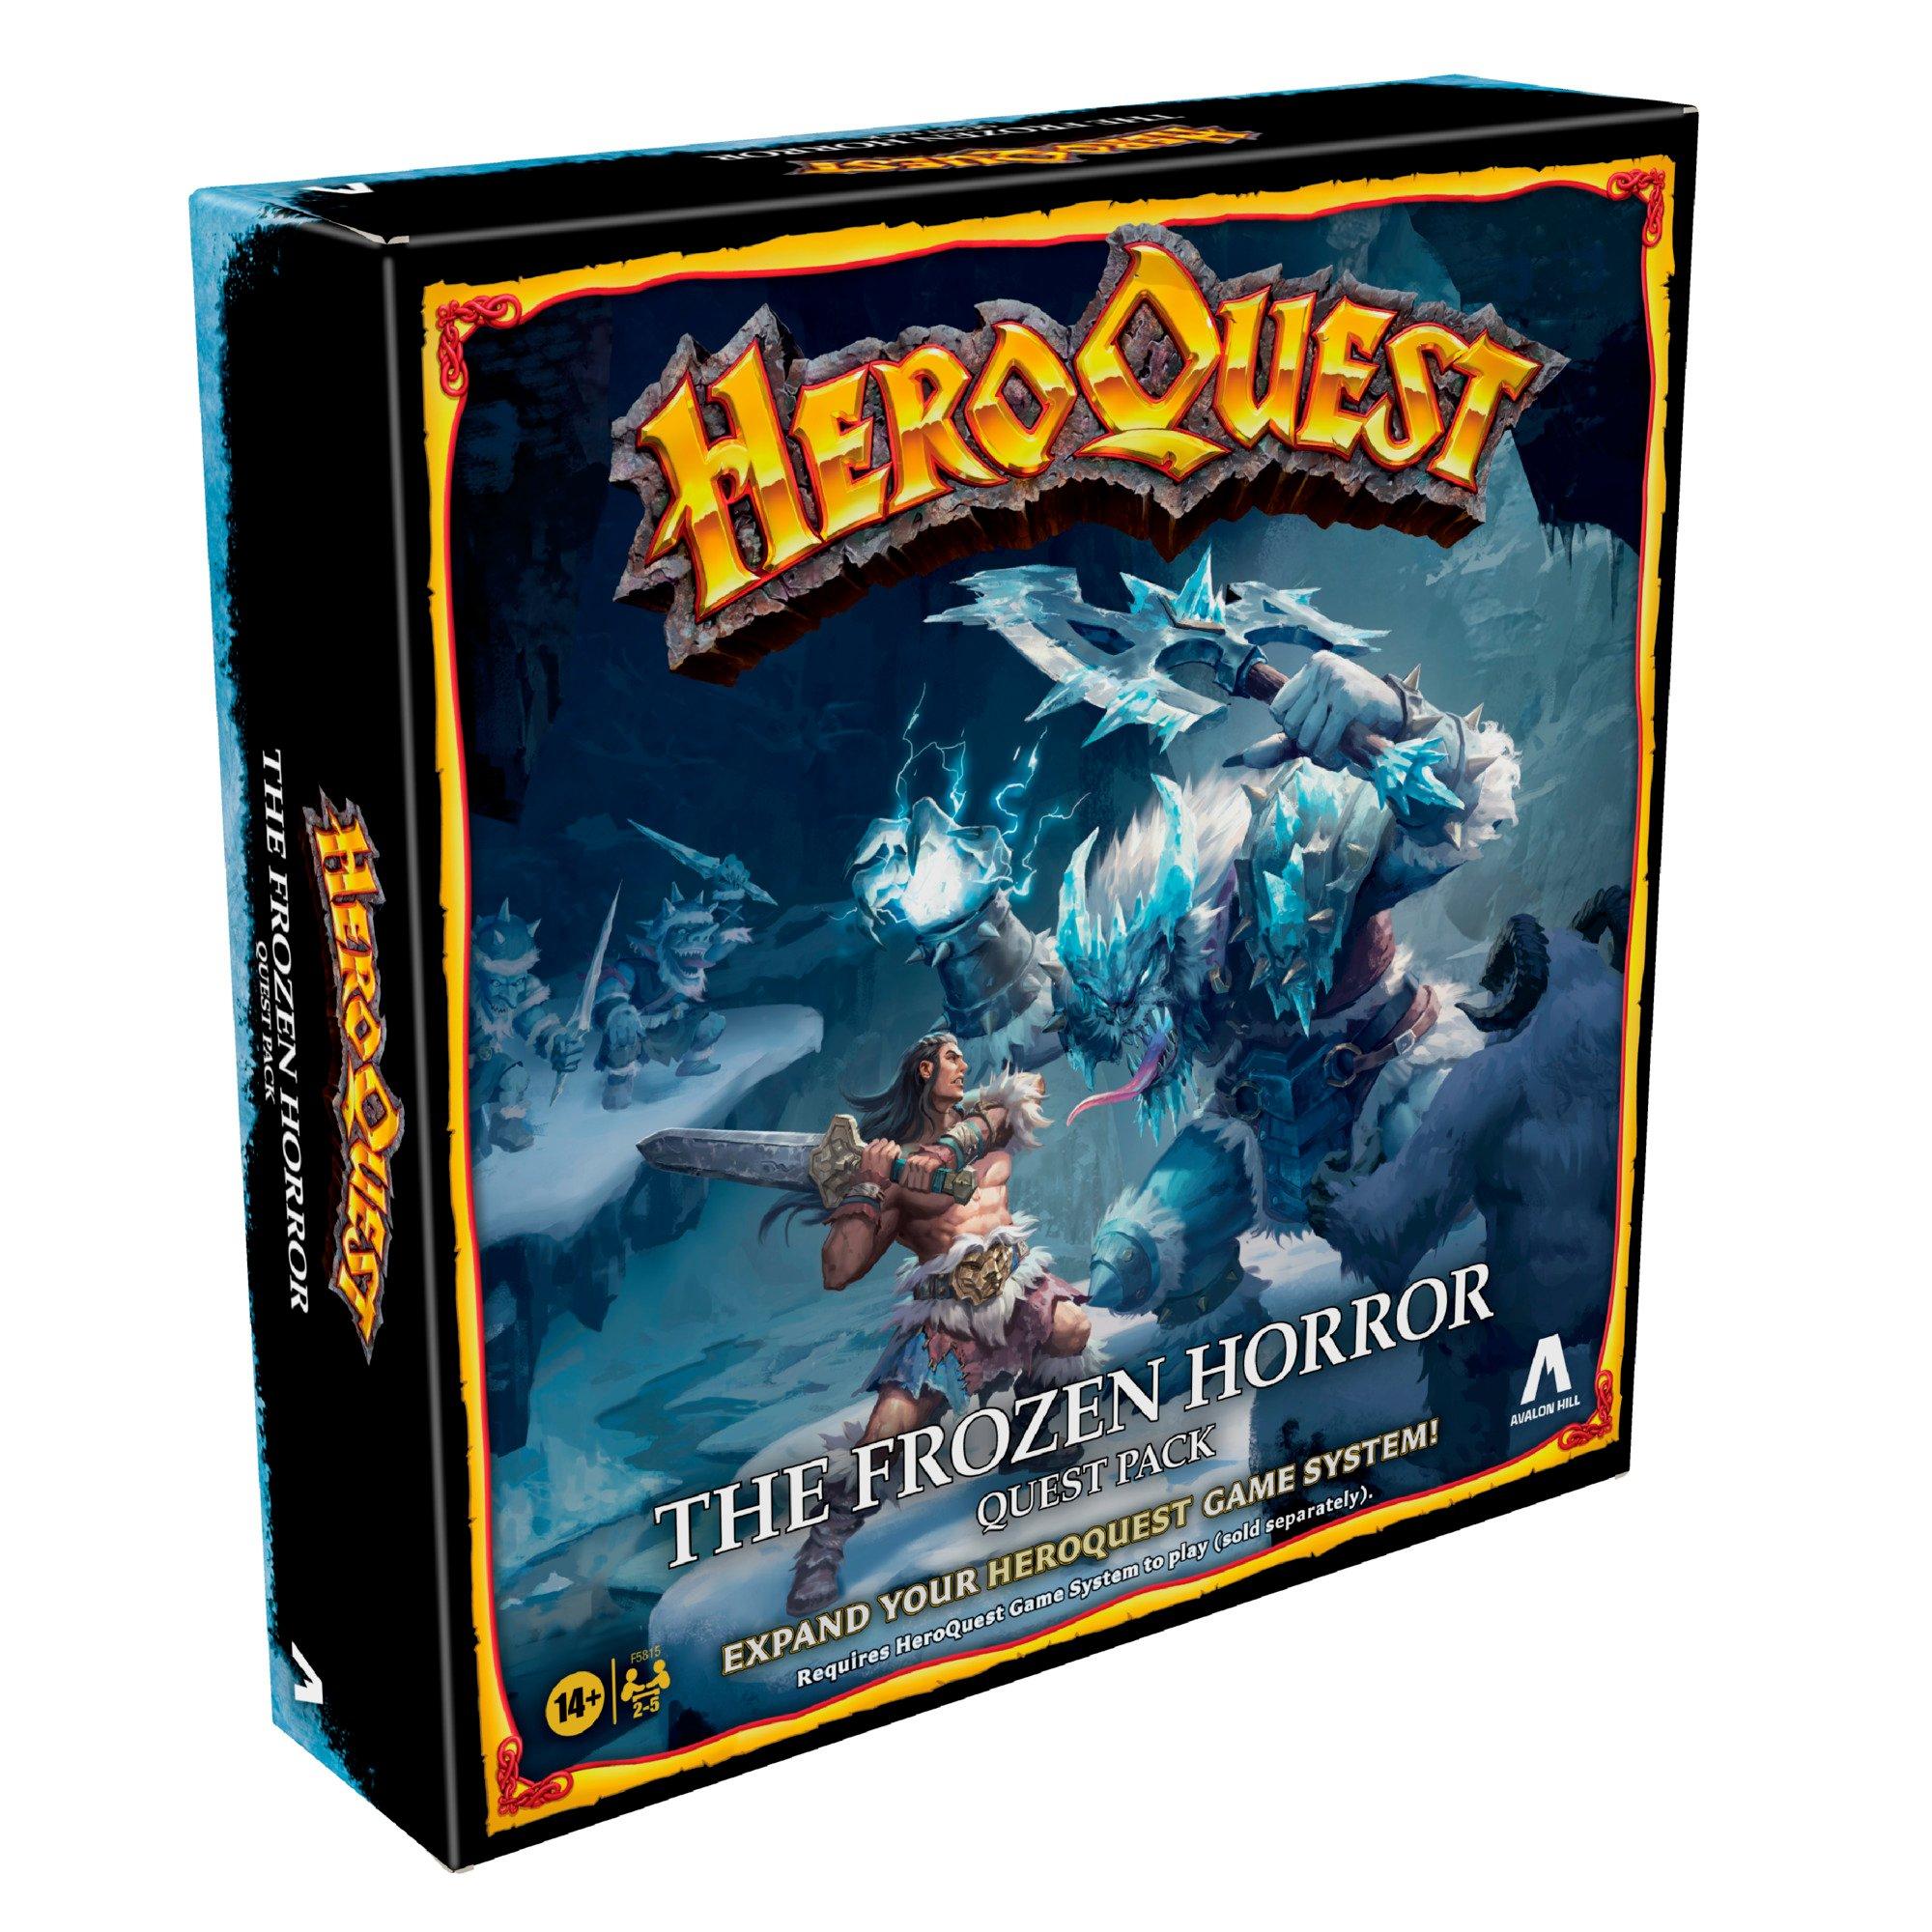 HeroQuest The Frozen Horror Quest Pack